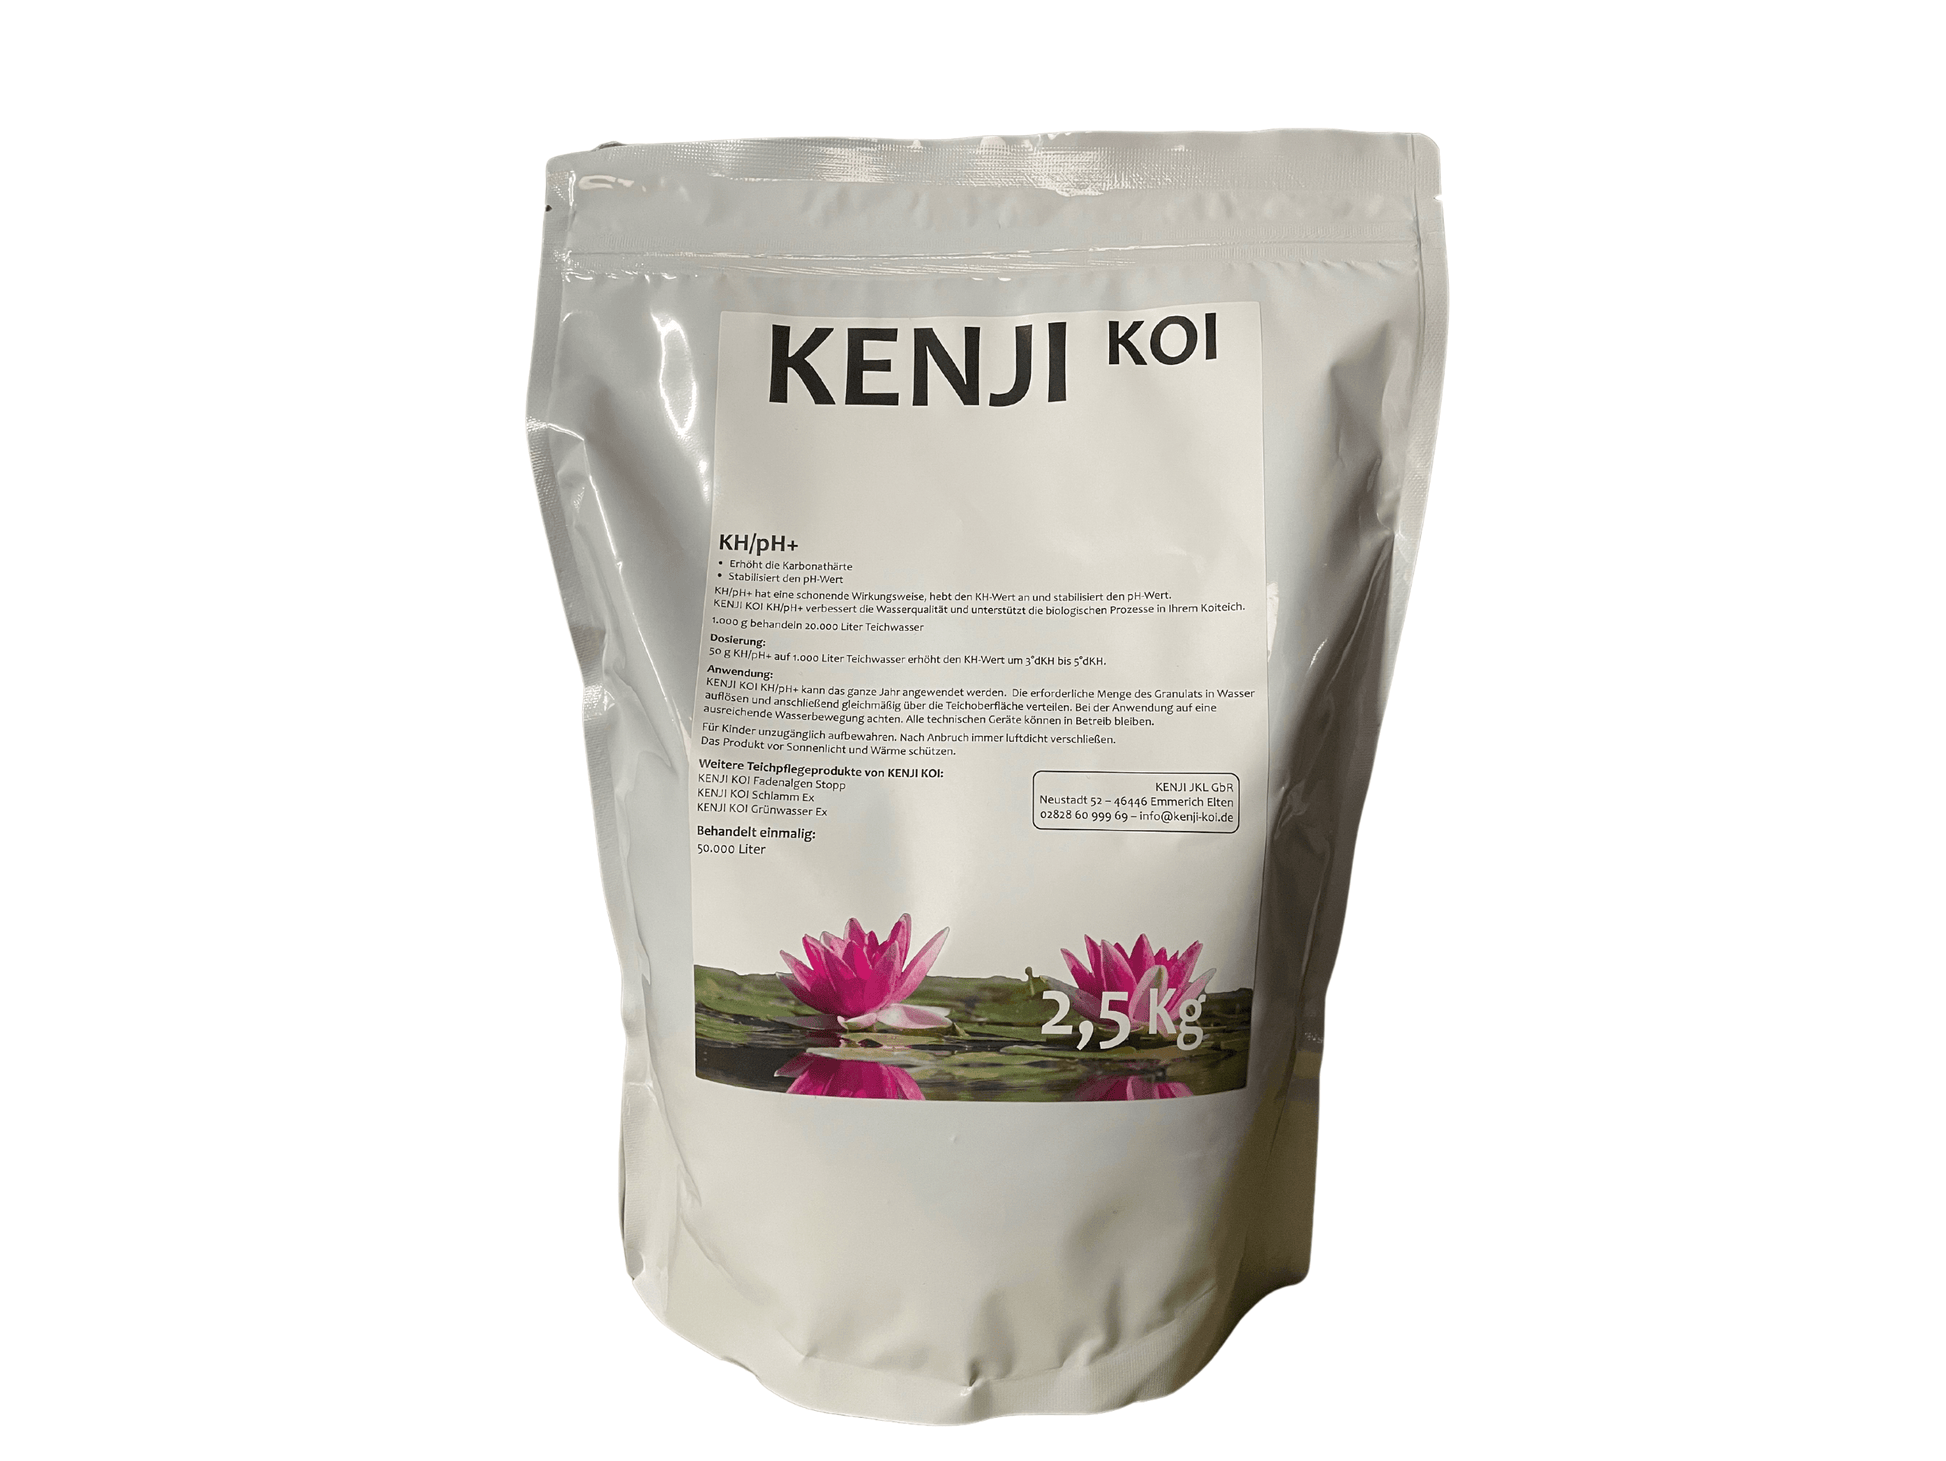 KENJI KOI KH/pH+ 2,5kg - KENJI KOI Products